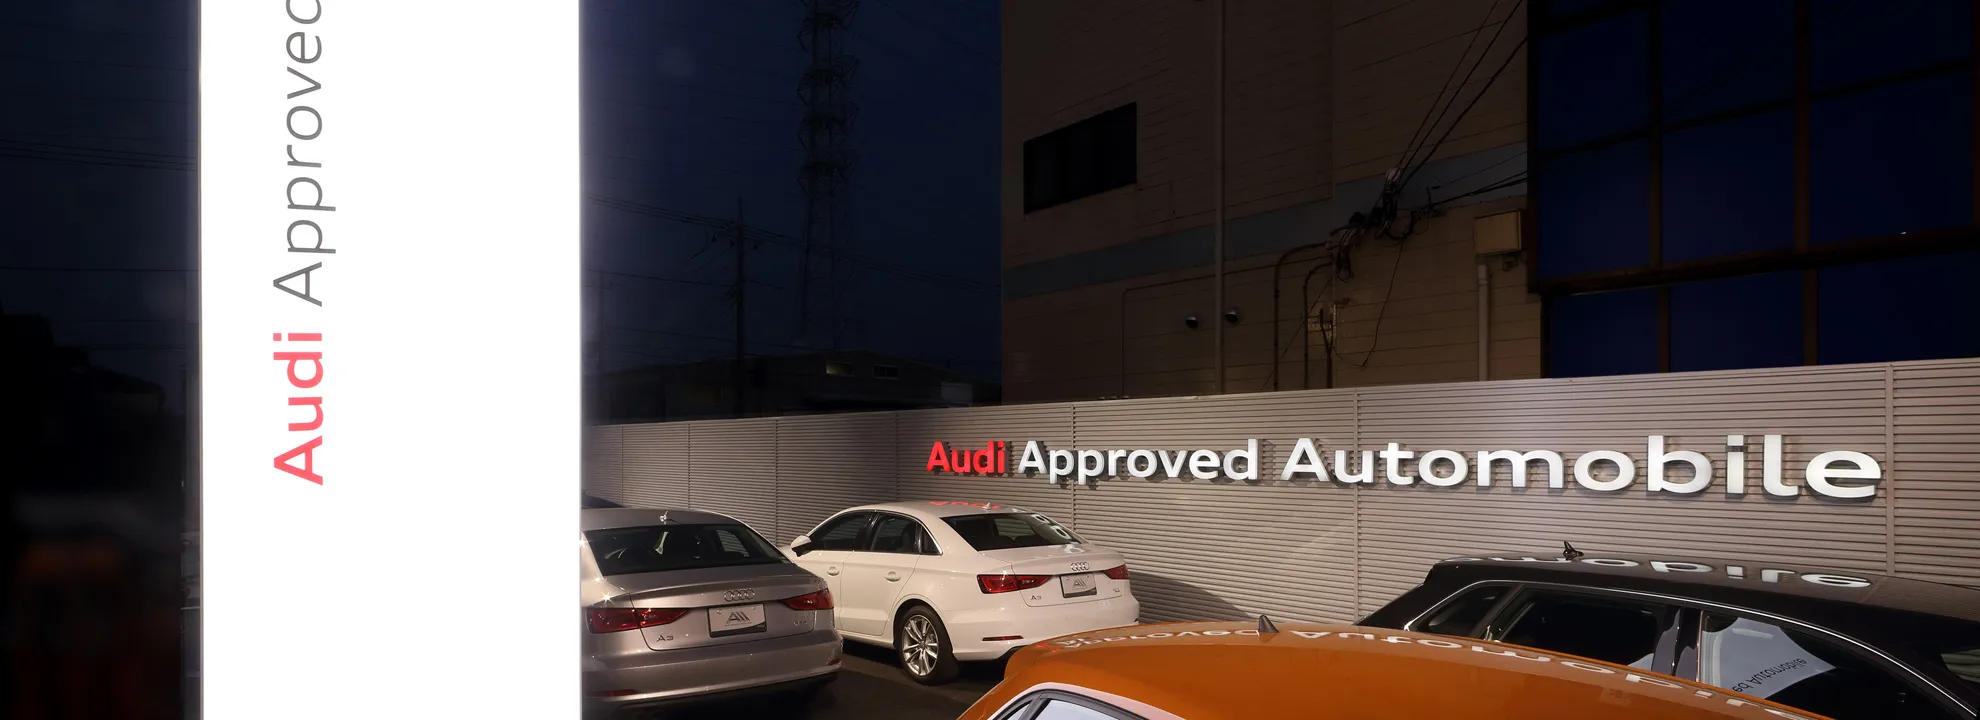 Audi Approved Automobile 相模原